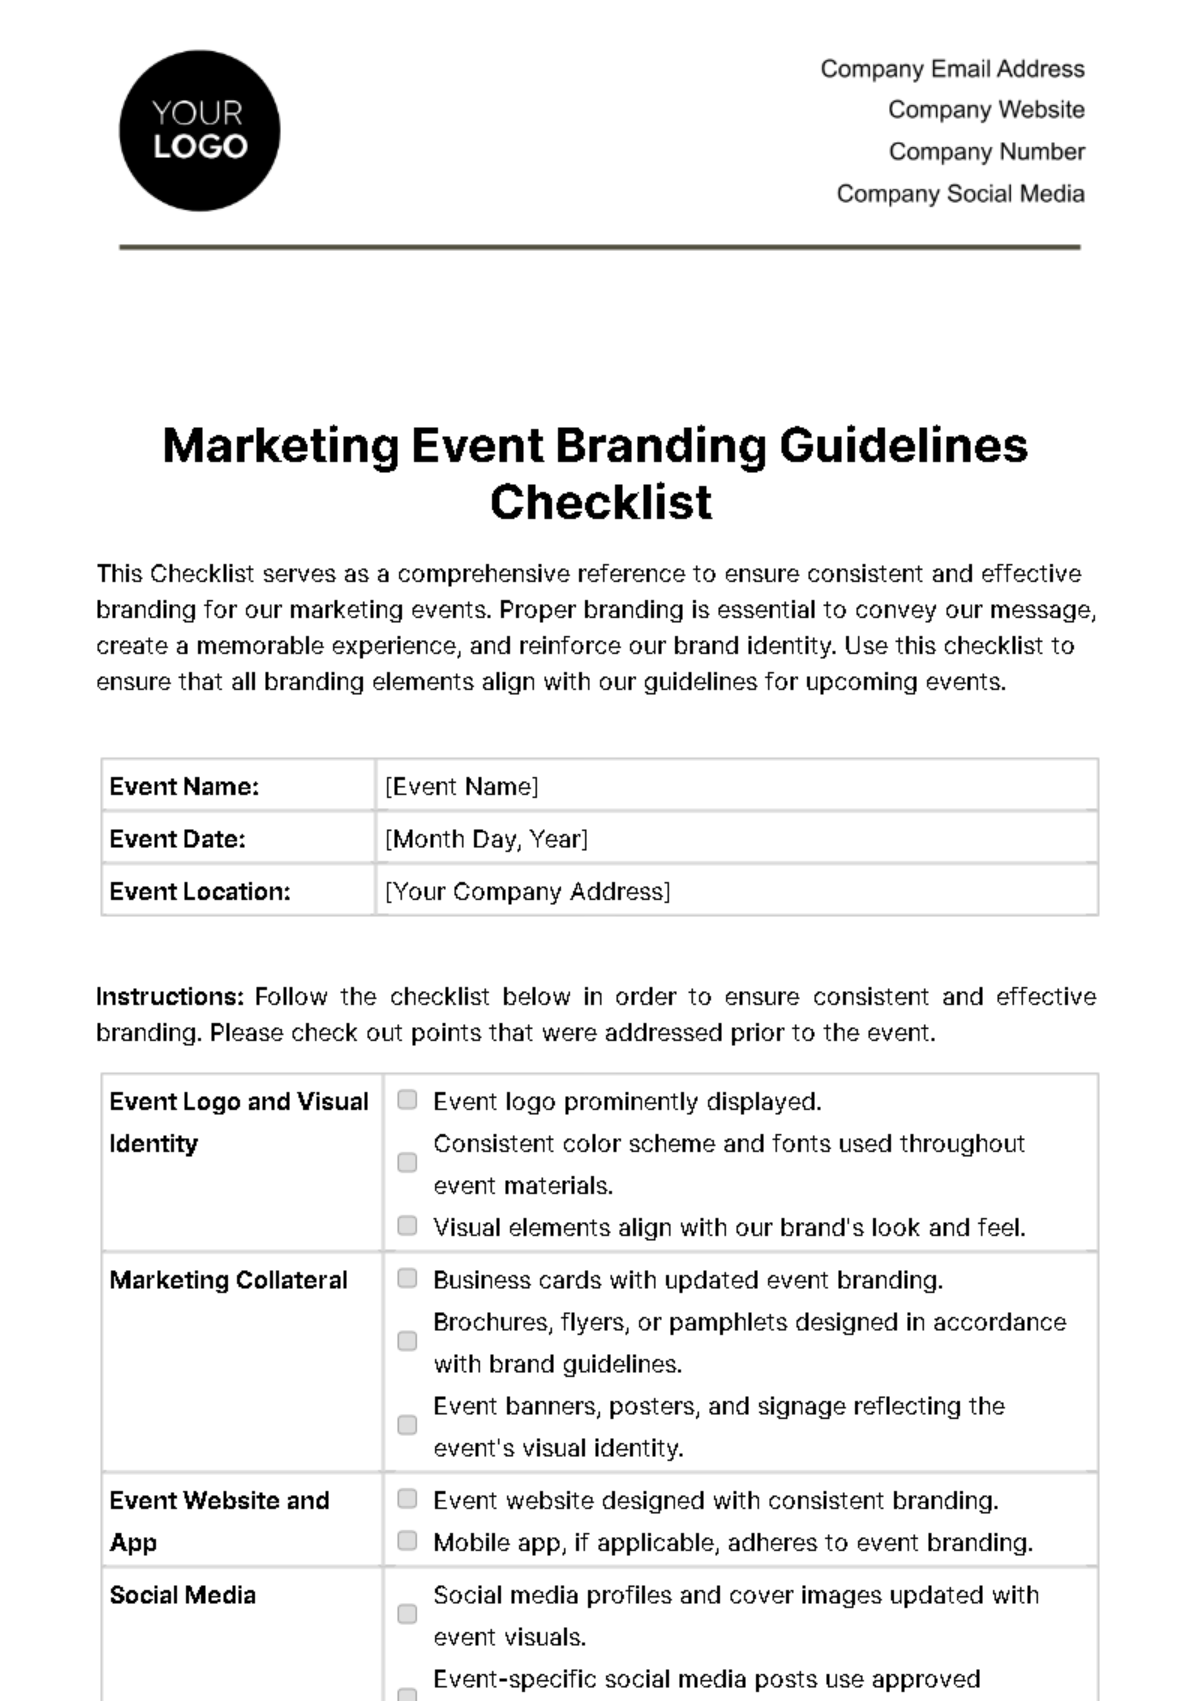 Marketing Event Branding Guidelines Checklist Template